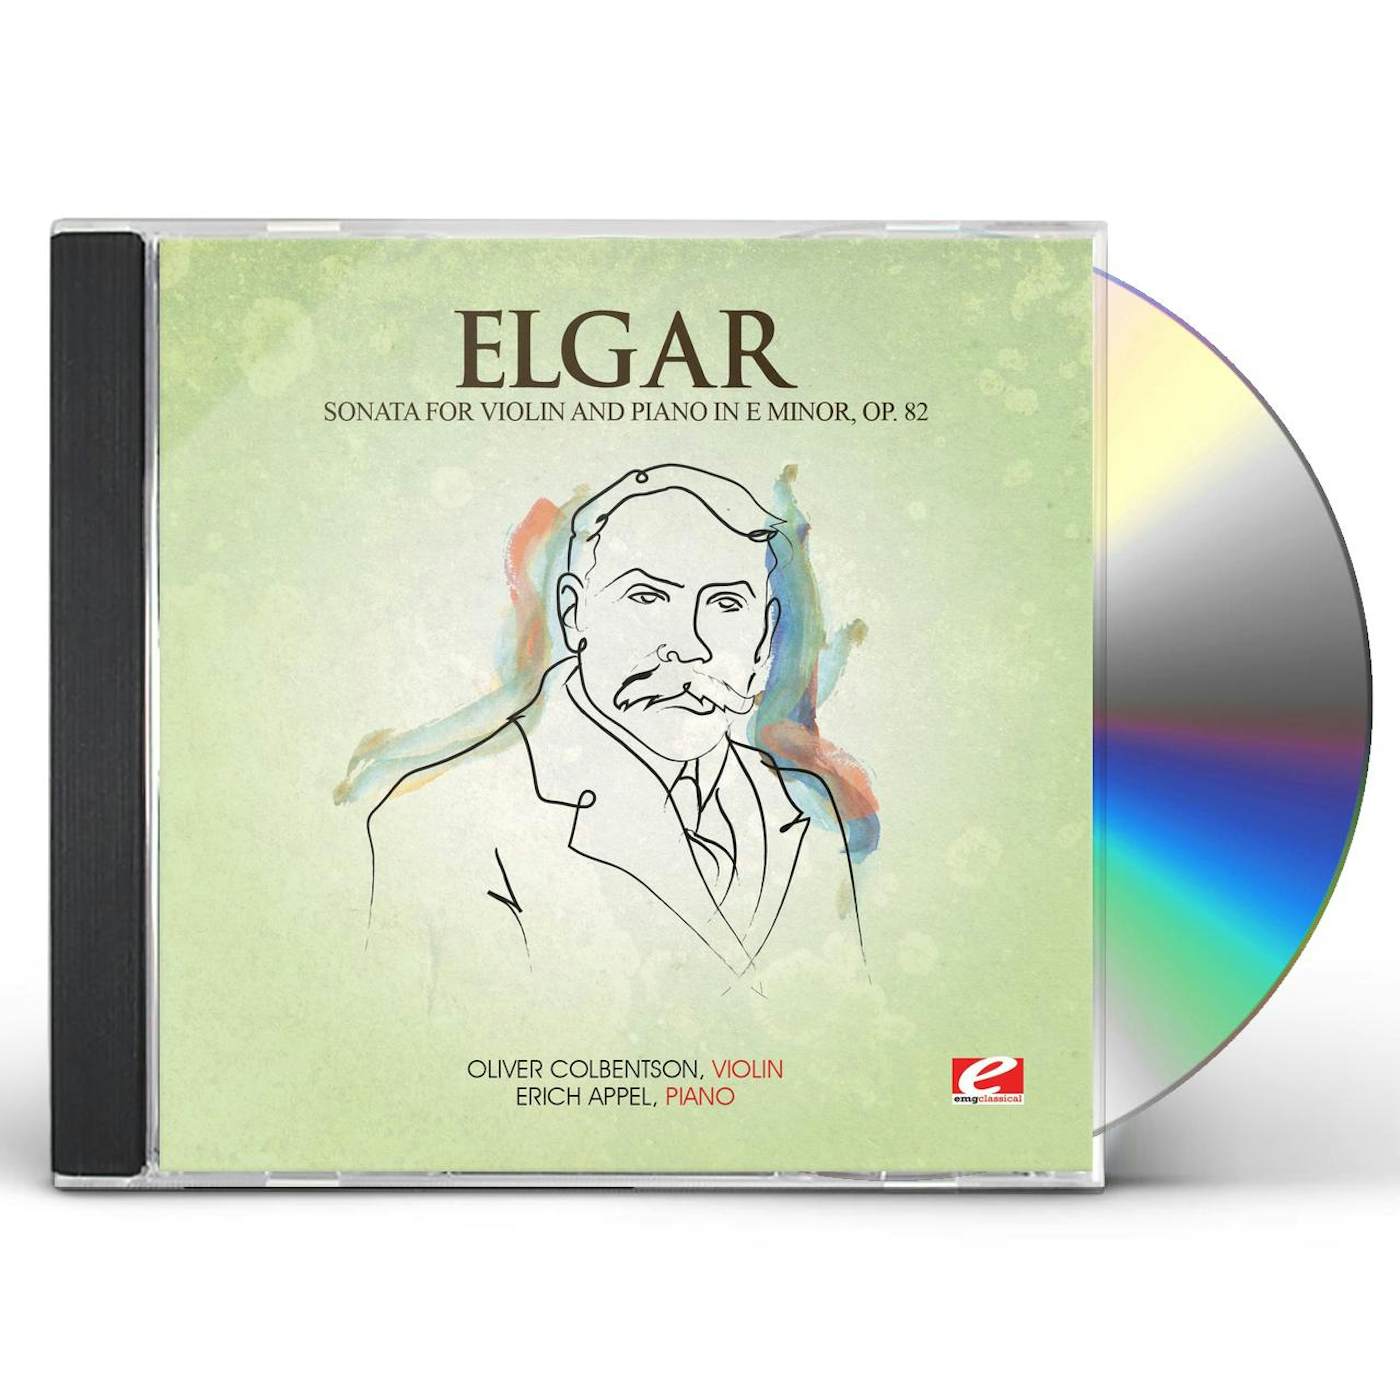 Elgar SONATA VIOL & PIANO E MIN 82 CD